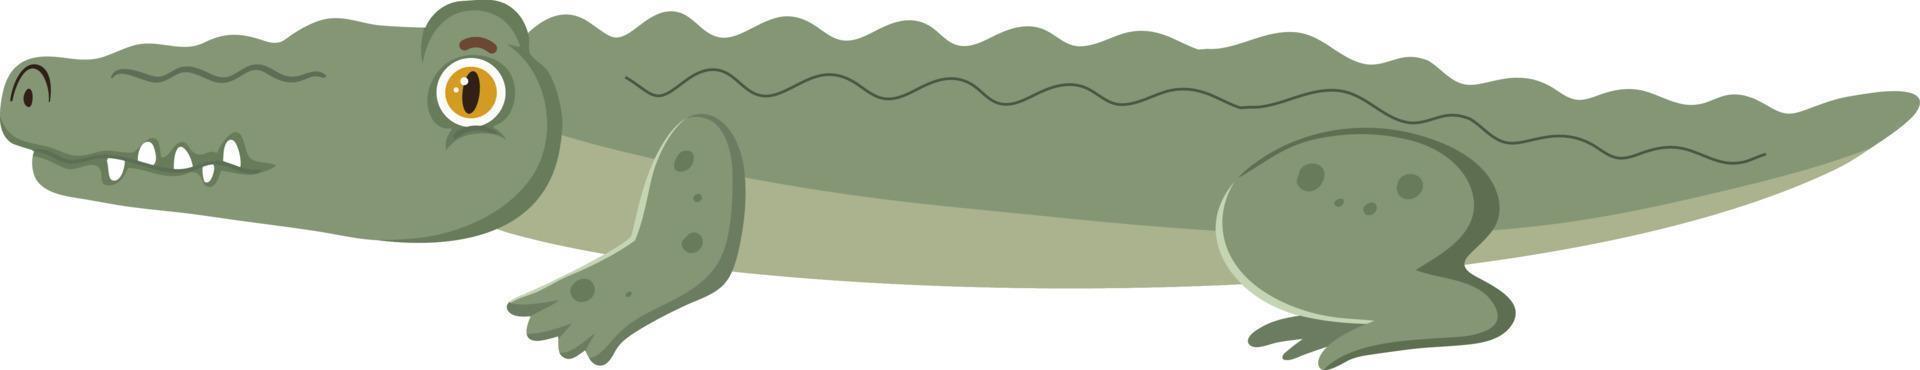 Side of crocodile in flat cartoon style vector